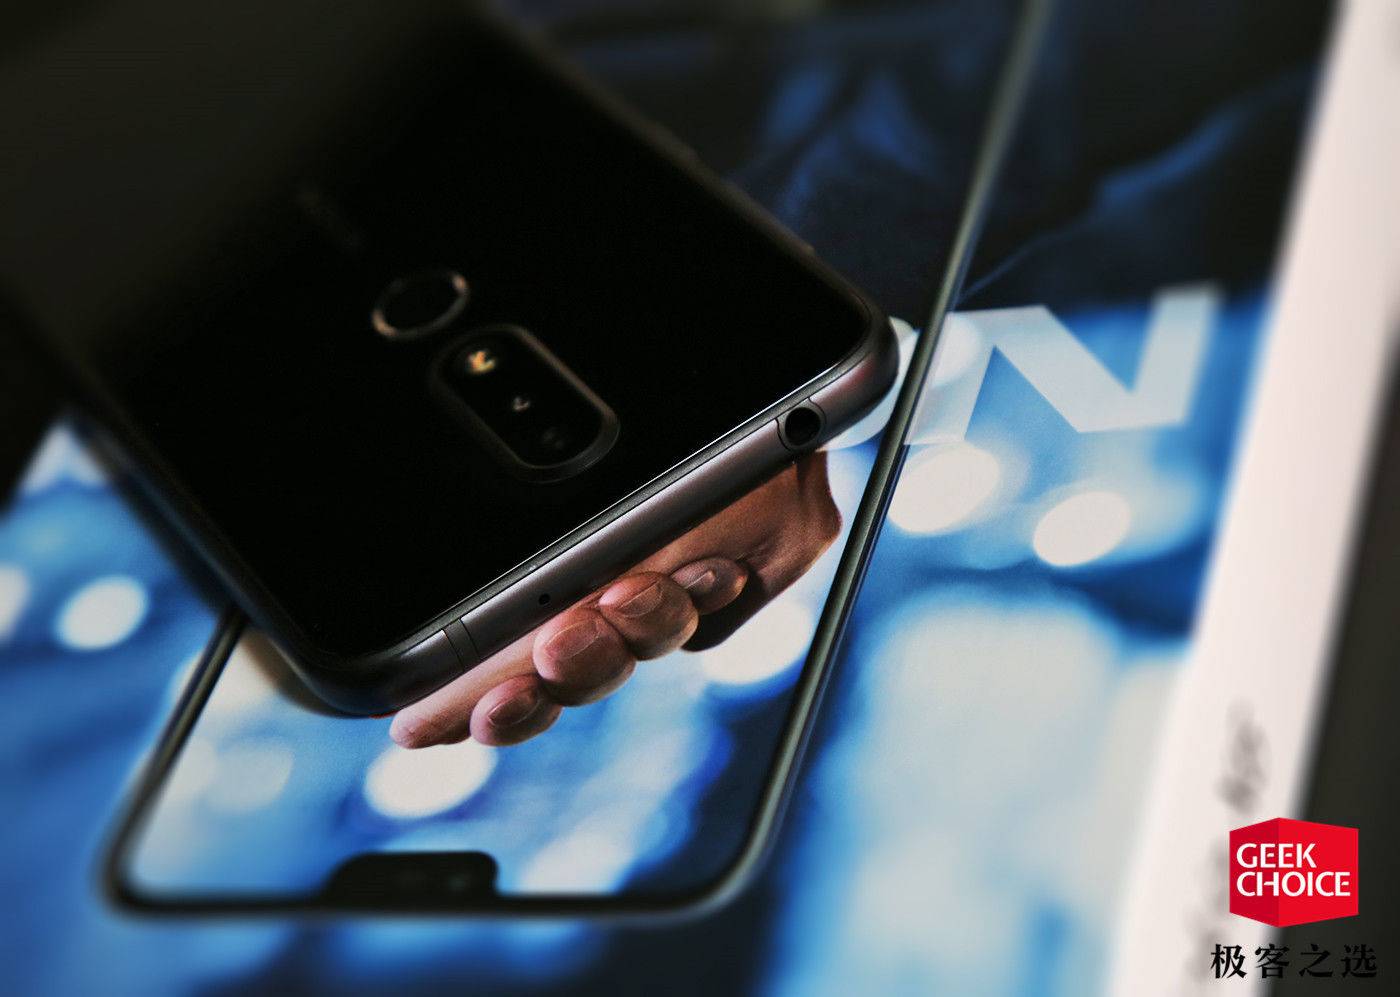 Nokia X6 体验:主流的「刘海屏」和骁龙 636,却